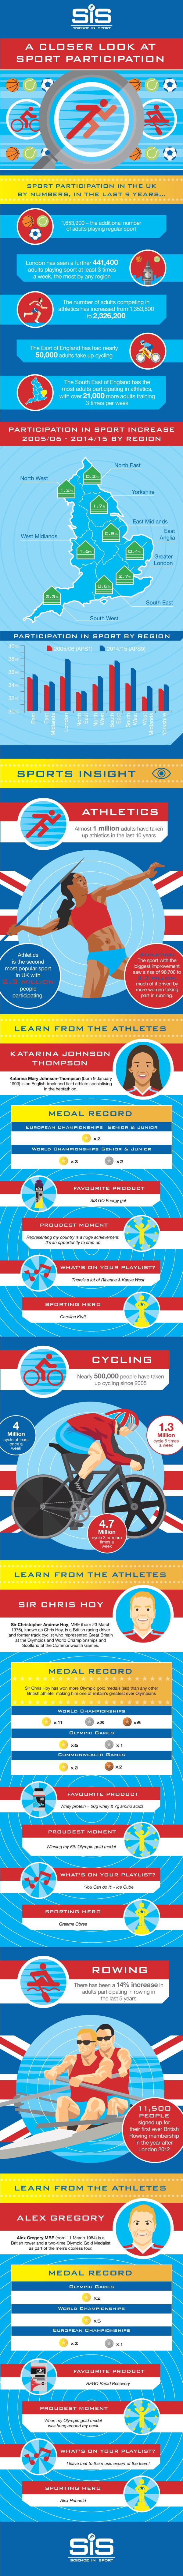 sports participation infographic